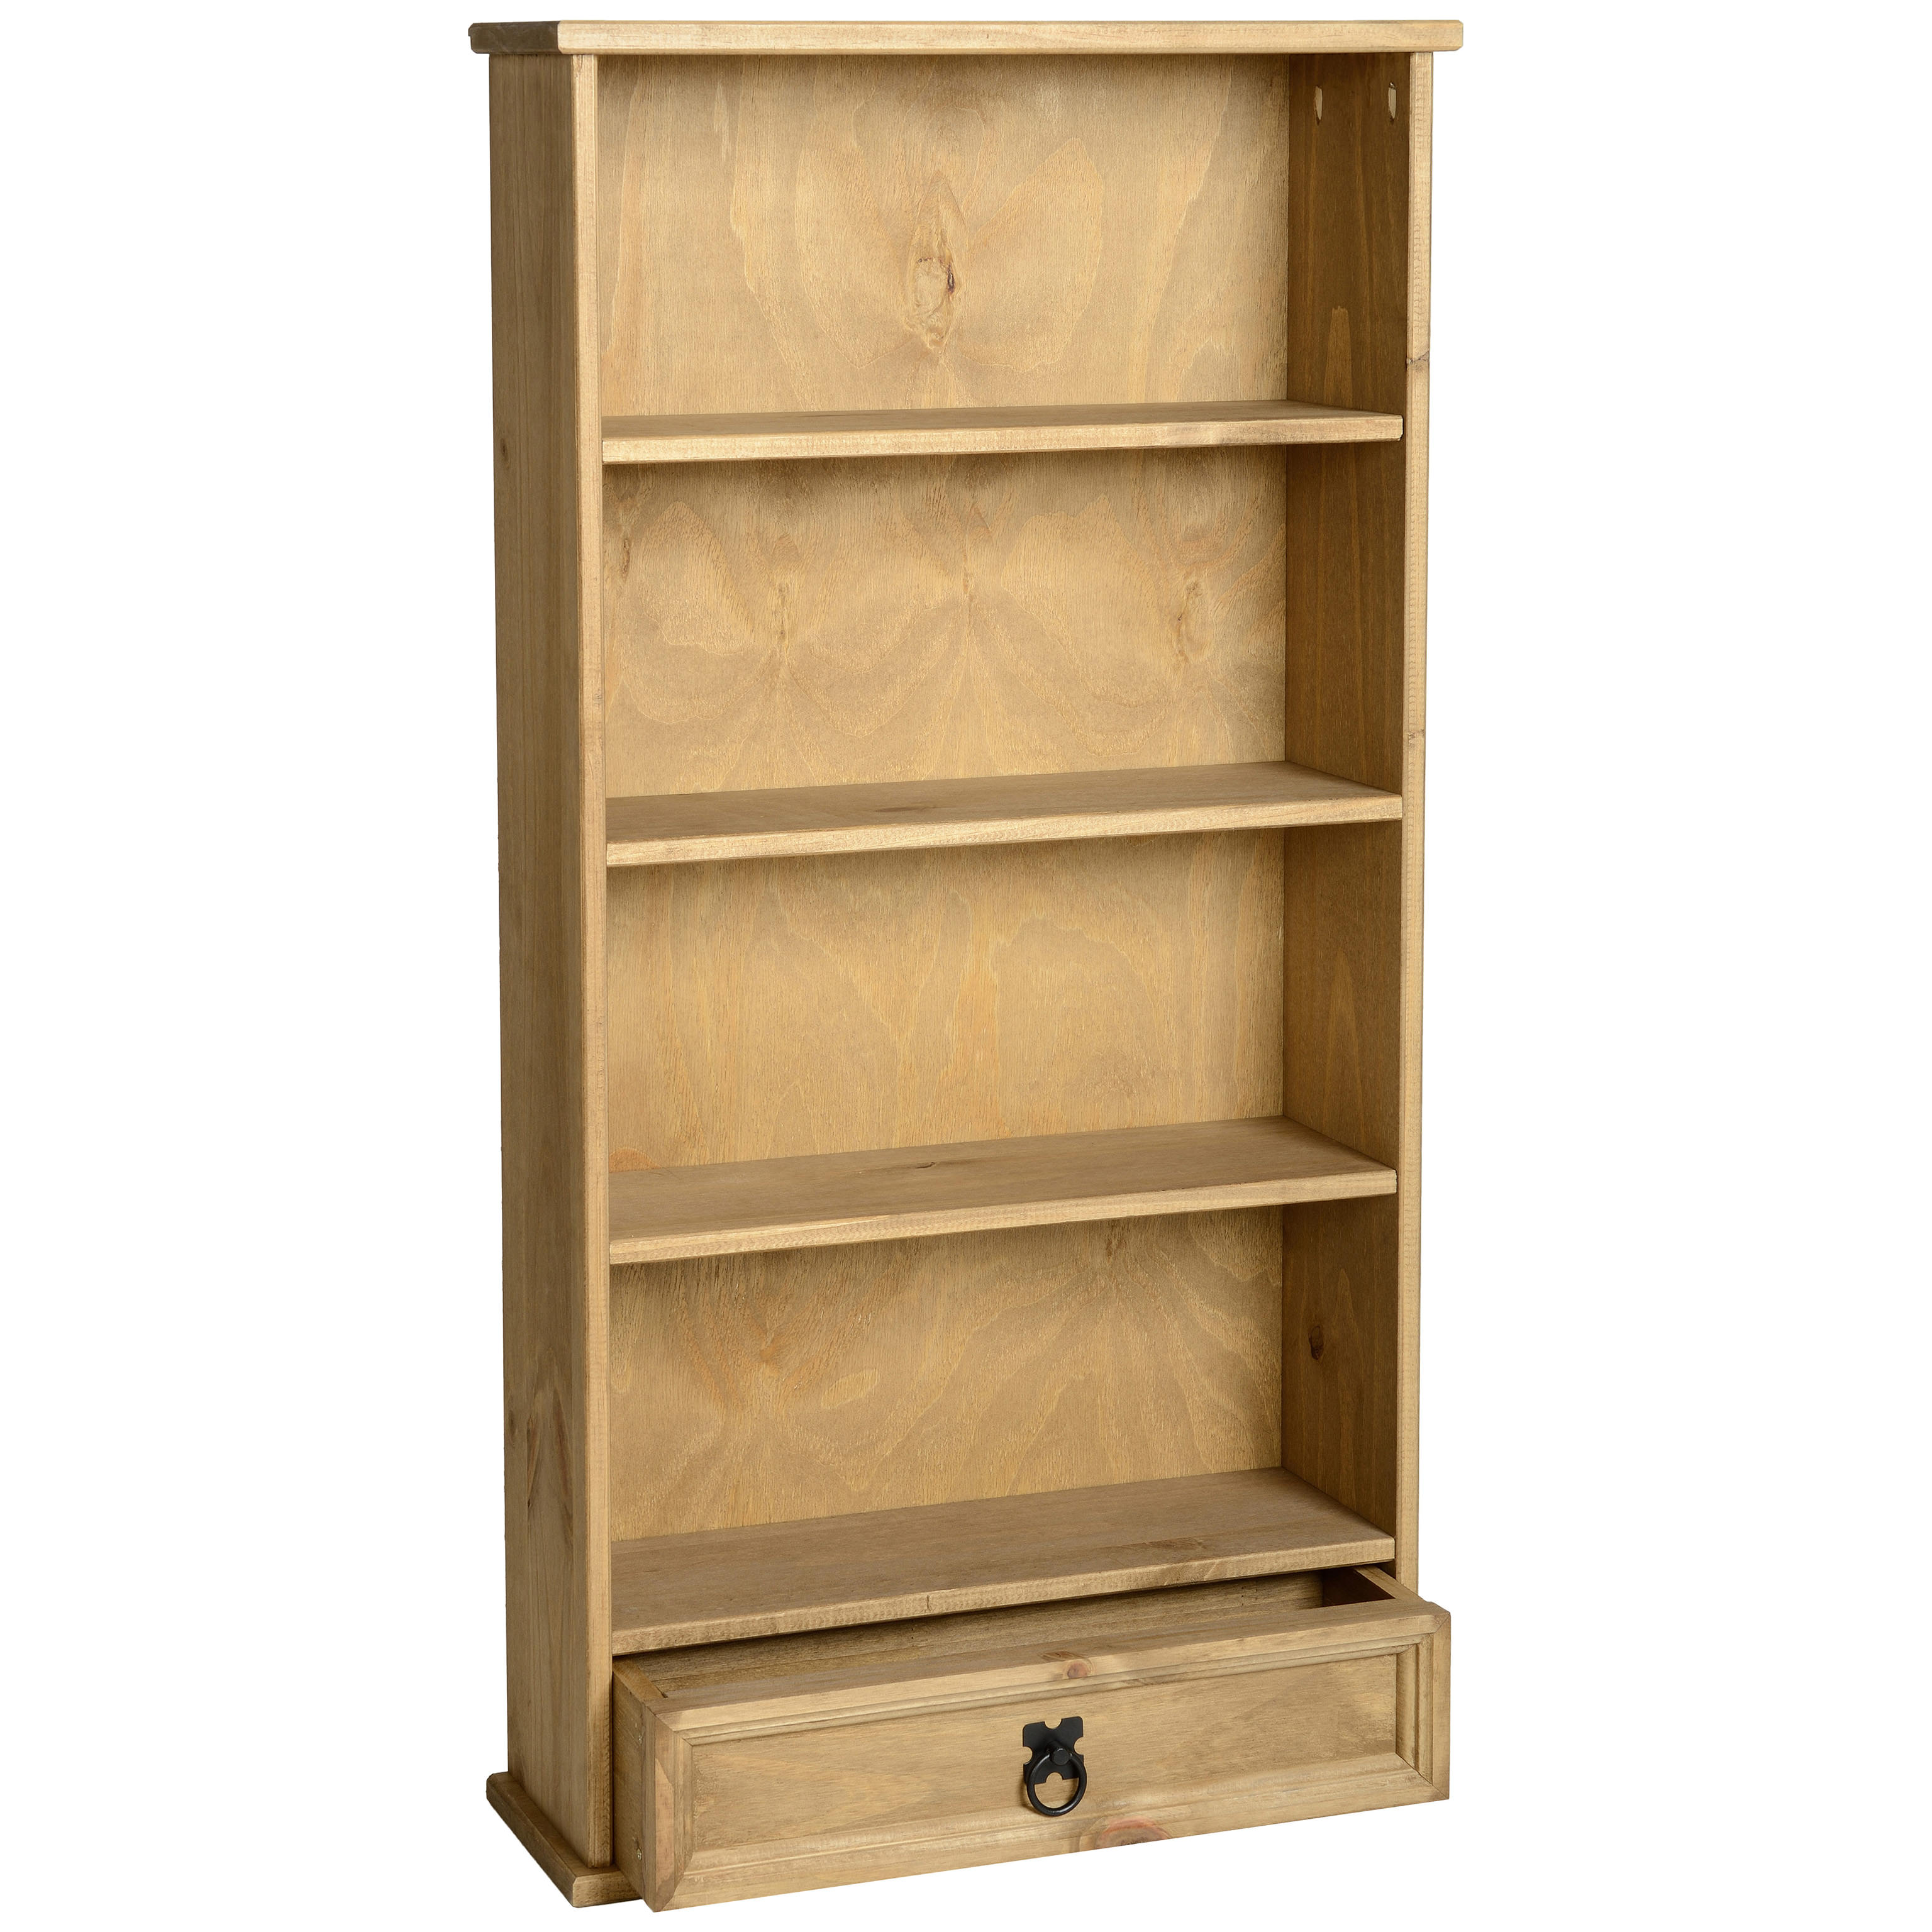 Waxed Pine Dvd Media Storage Rack Shelf Shelving Cabinet Unit With